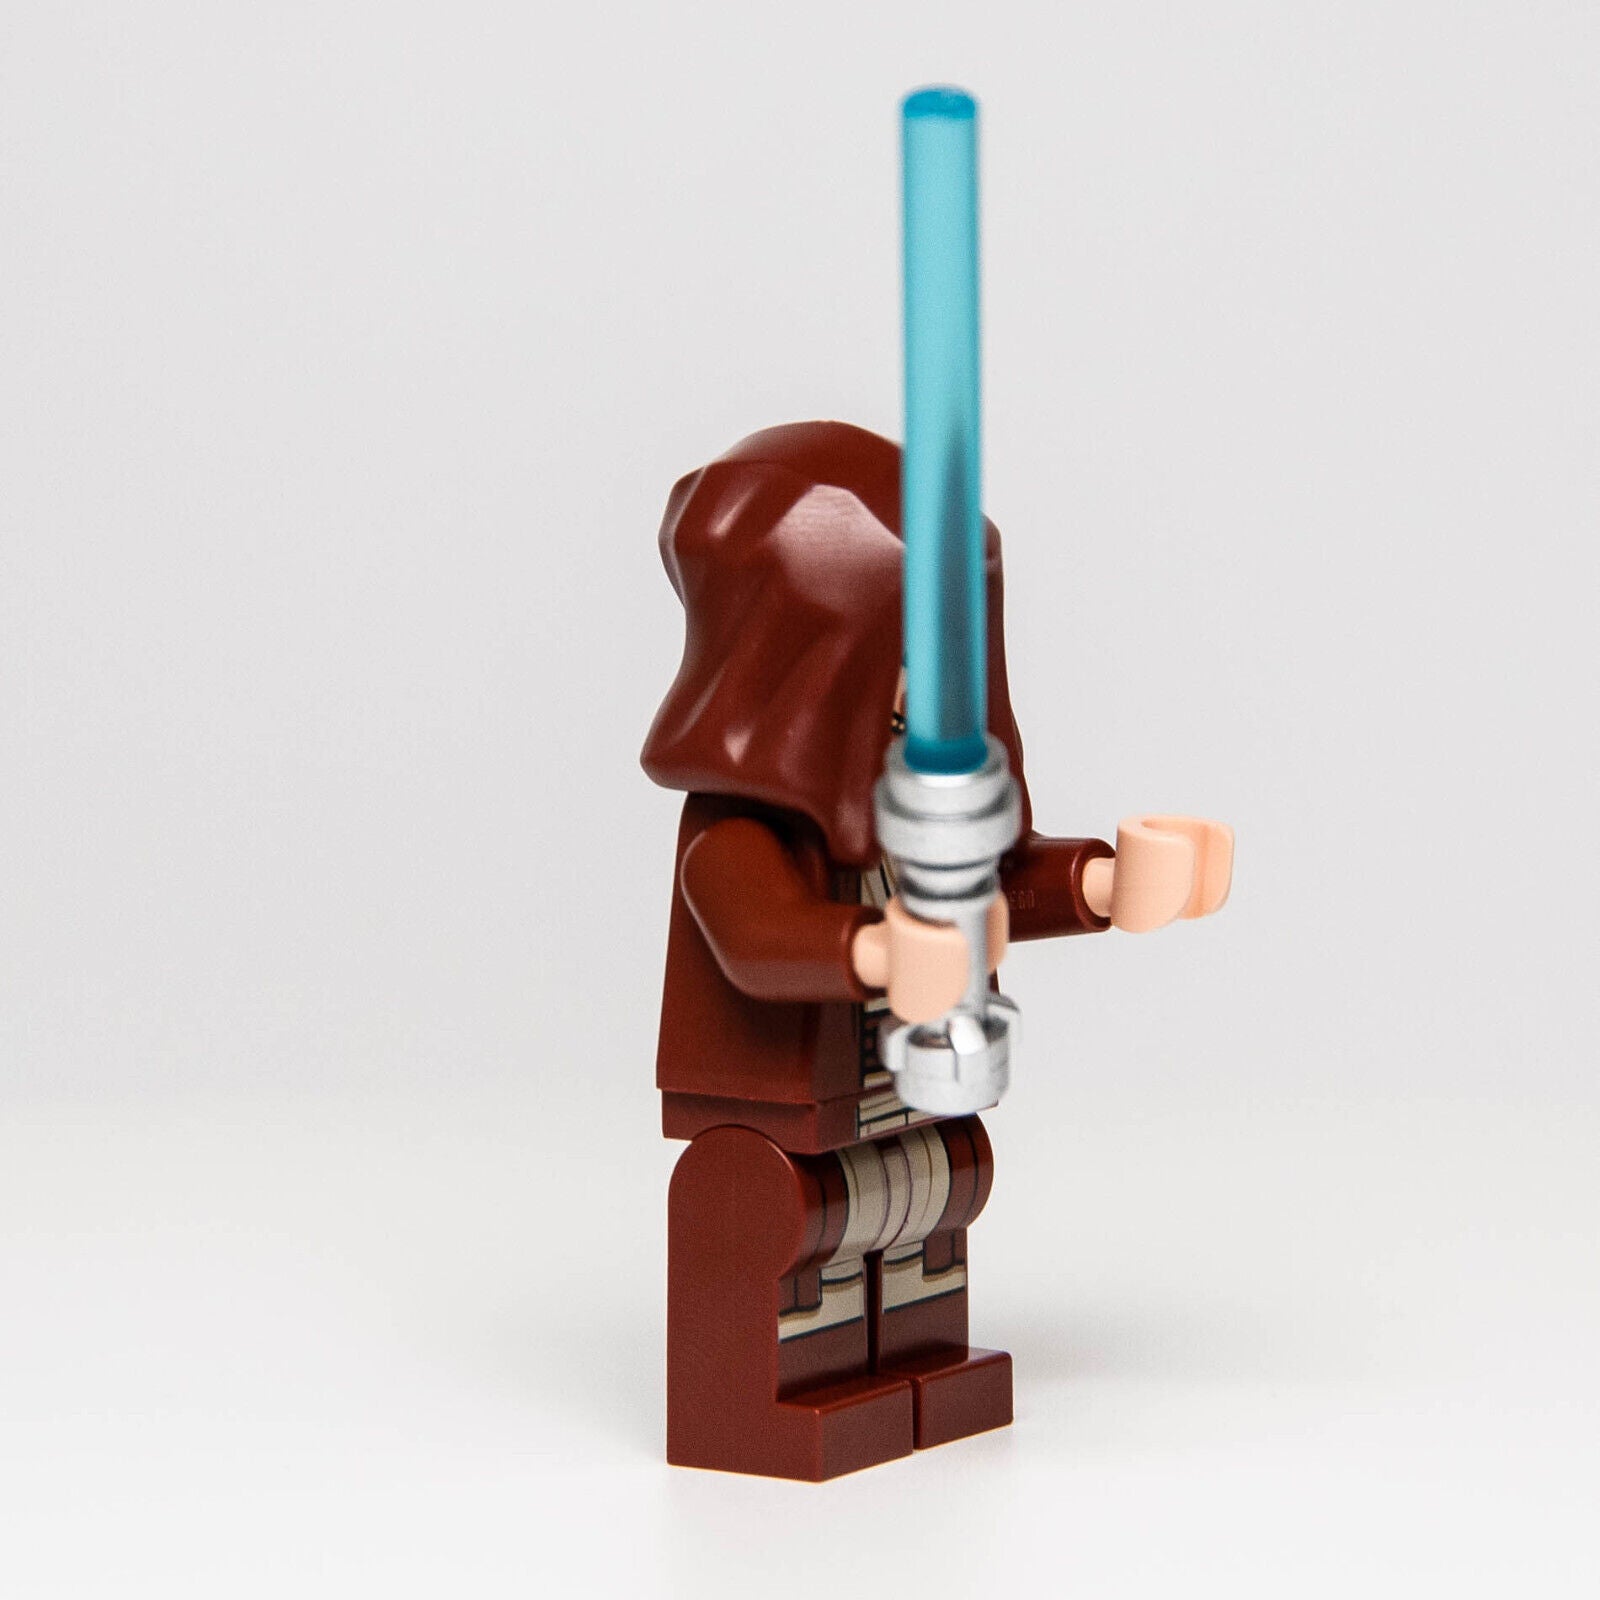 NEW Lego Star Wars Minifigure - Obi-Wan Kenobi (sw1220) 75333 w/ Hair & Saber